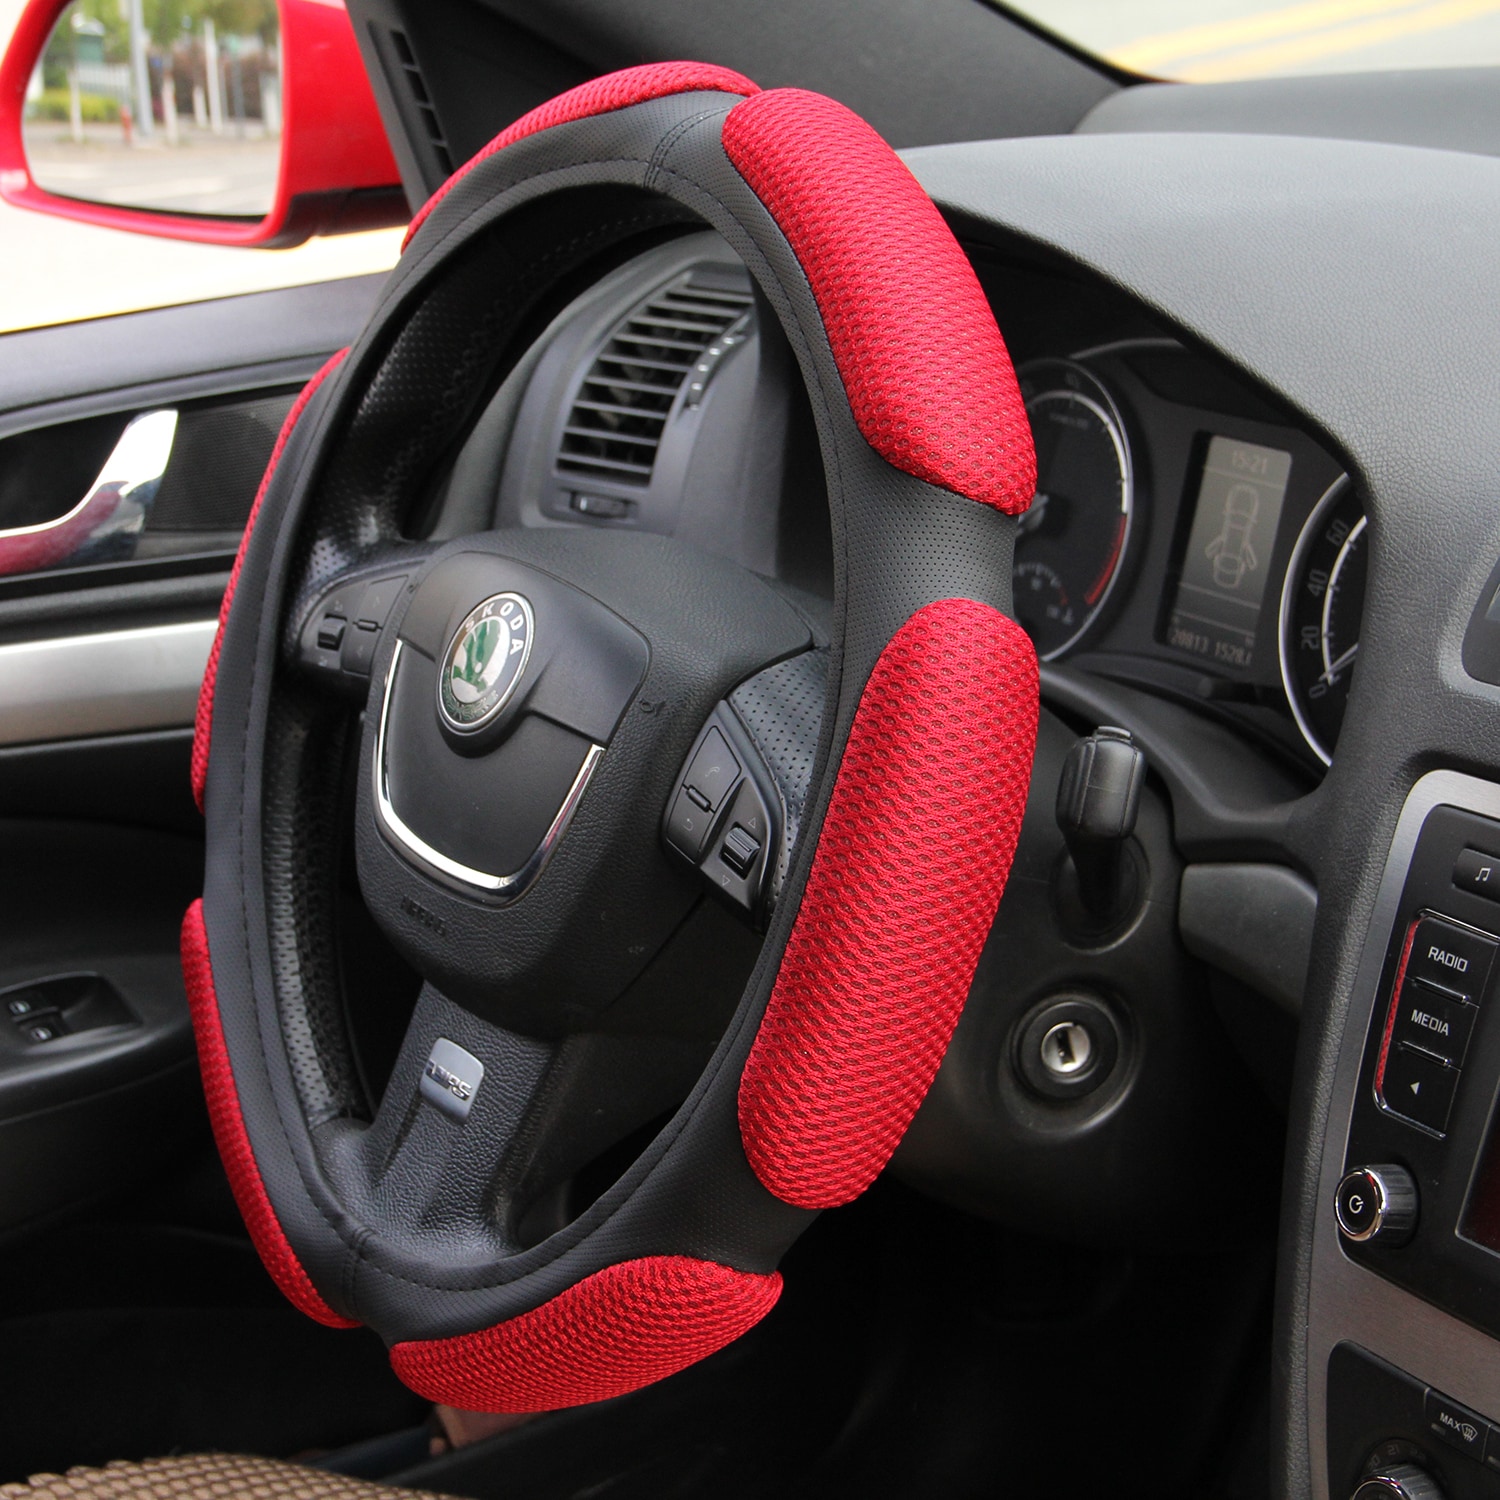 Heated Car Handlebar Cover Universal Type Steering Wheel Cover